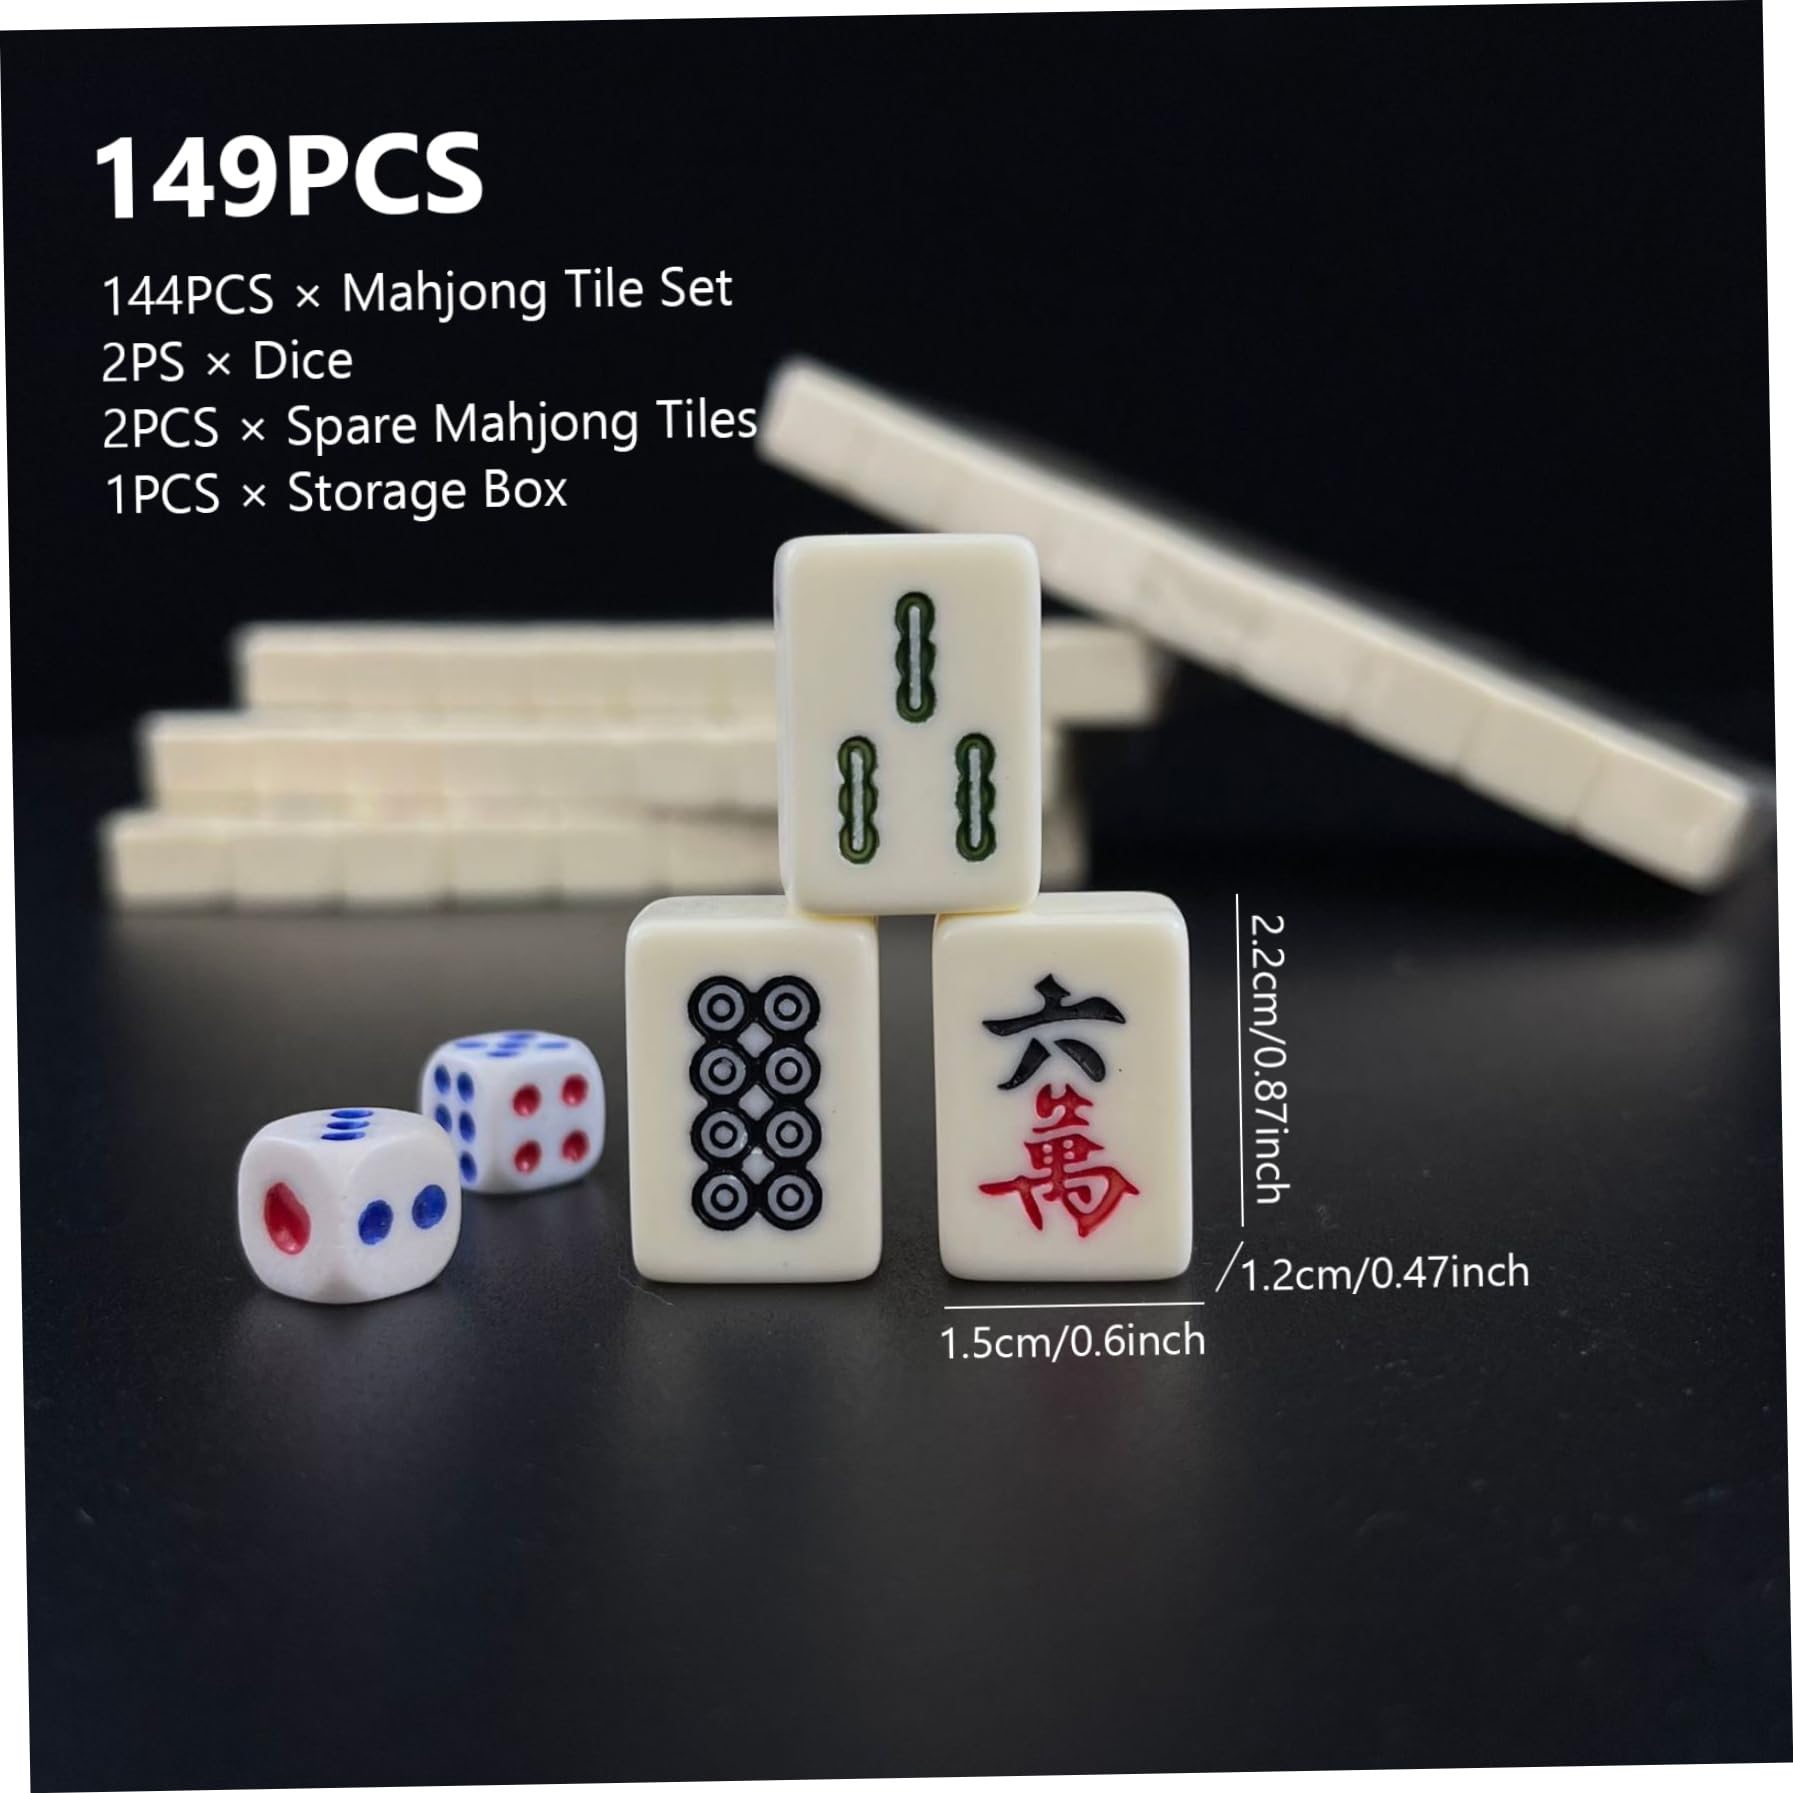 Viajemini Mahjong Set Travel Mahjong Traditional Mahjong Chinese Play with 144 PCS Mahjong Tiles 2 PCs Dicts for The Family Game of The Leisure Trip Party